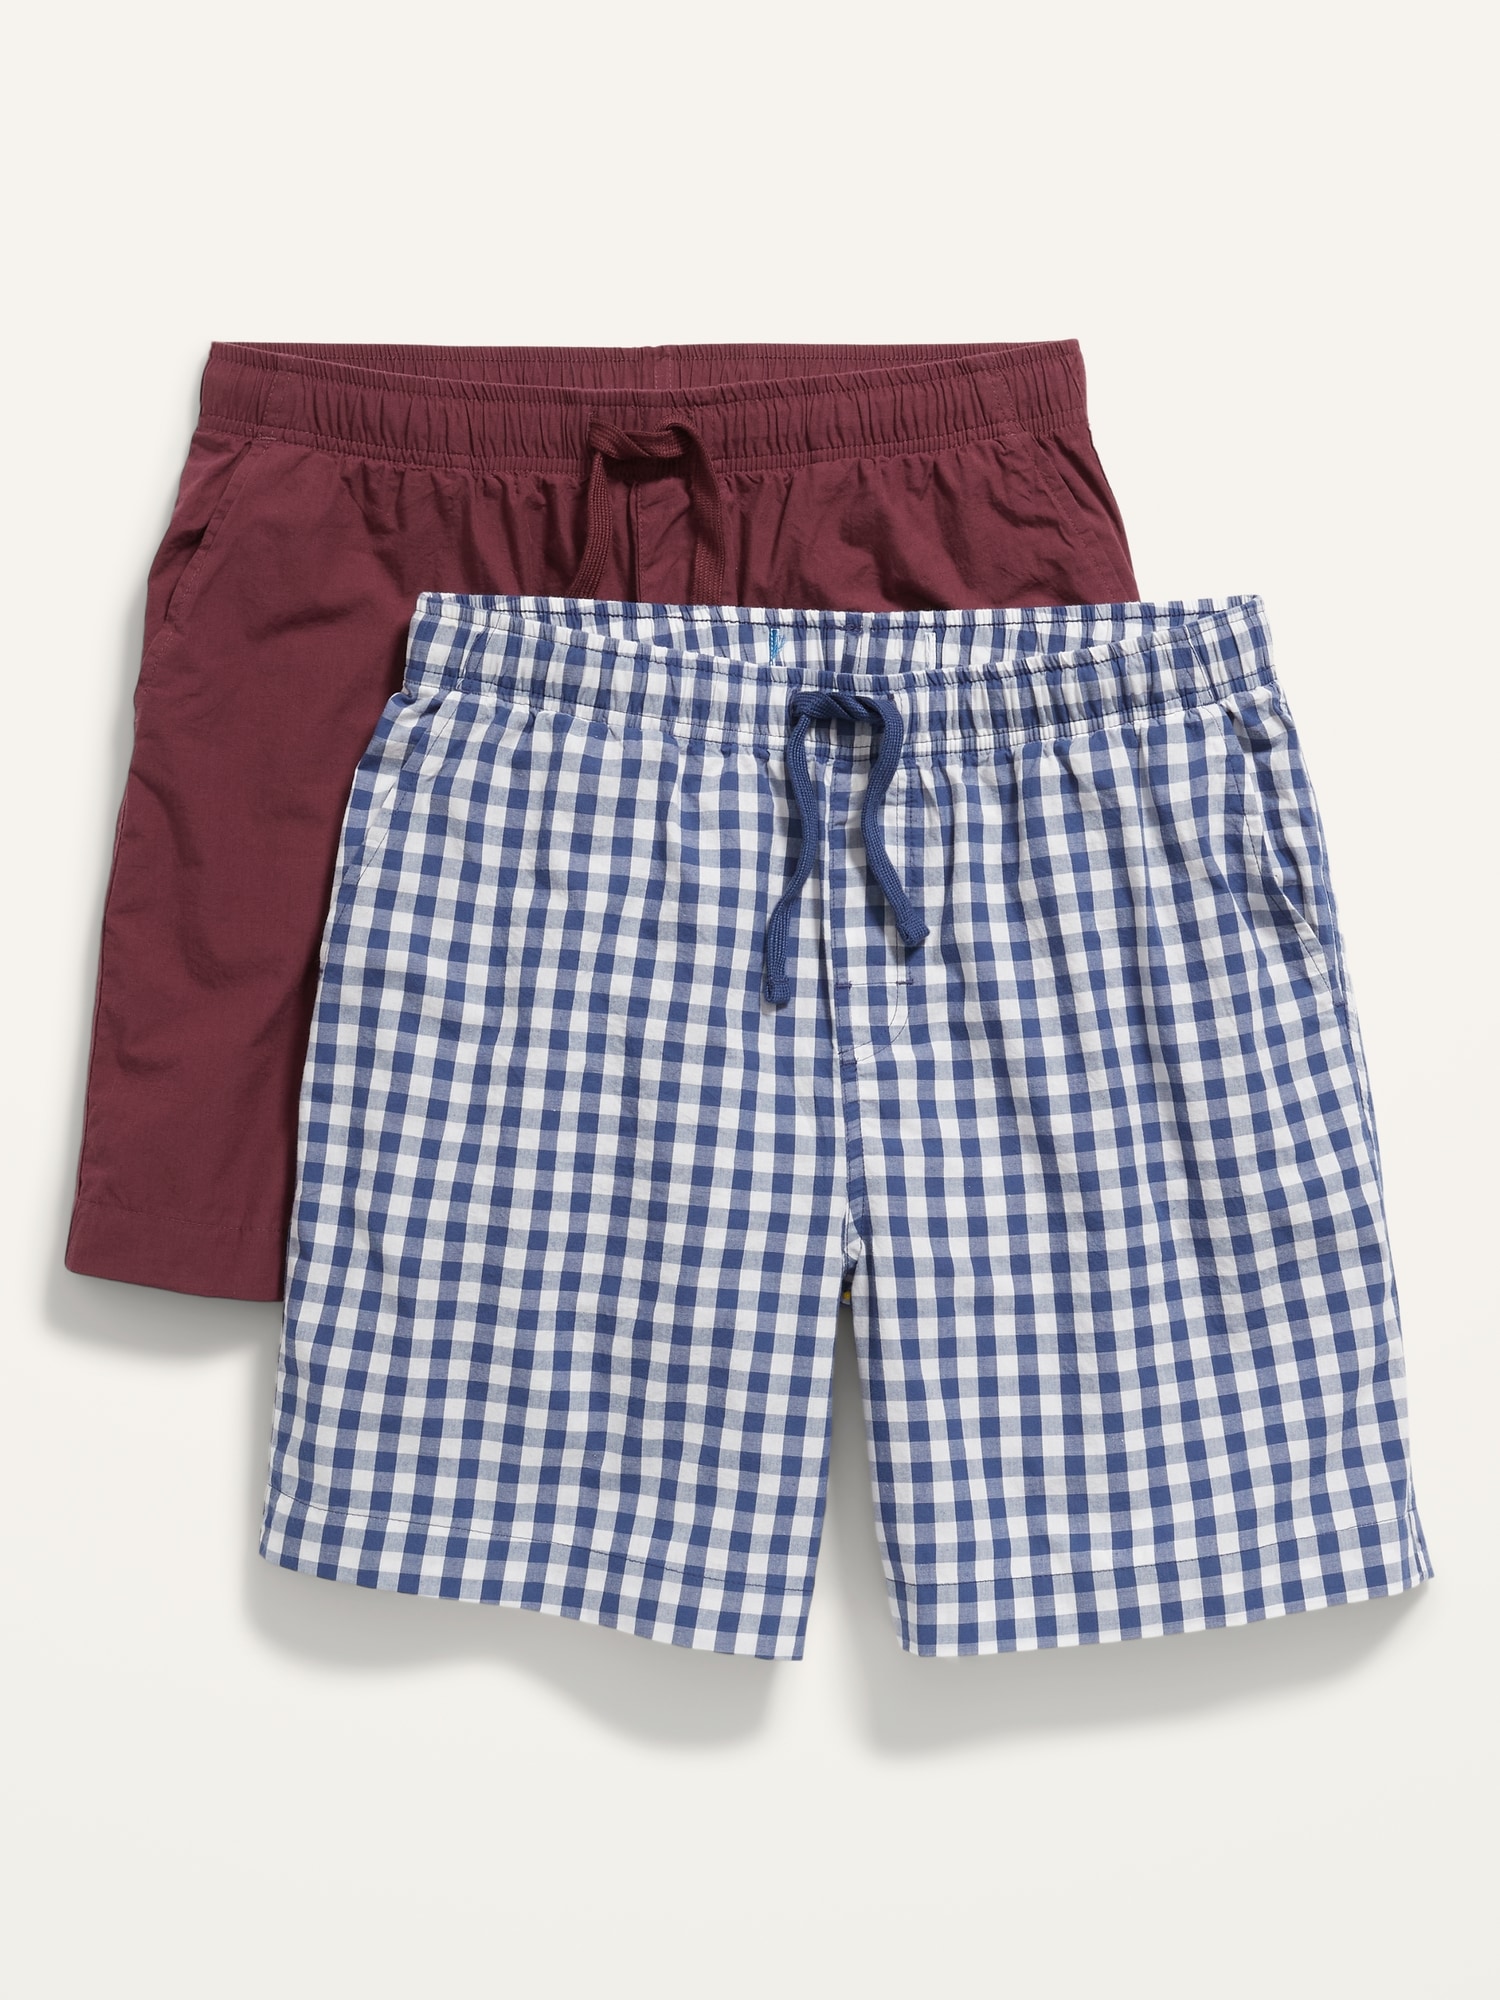 Old Navy Cotton Poplin Pajama Shorts 2-Pack for Men --7-inch inseam multi. 1